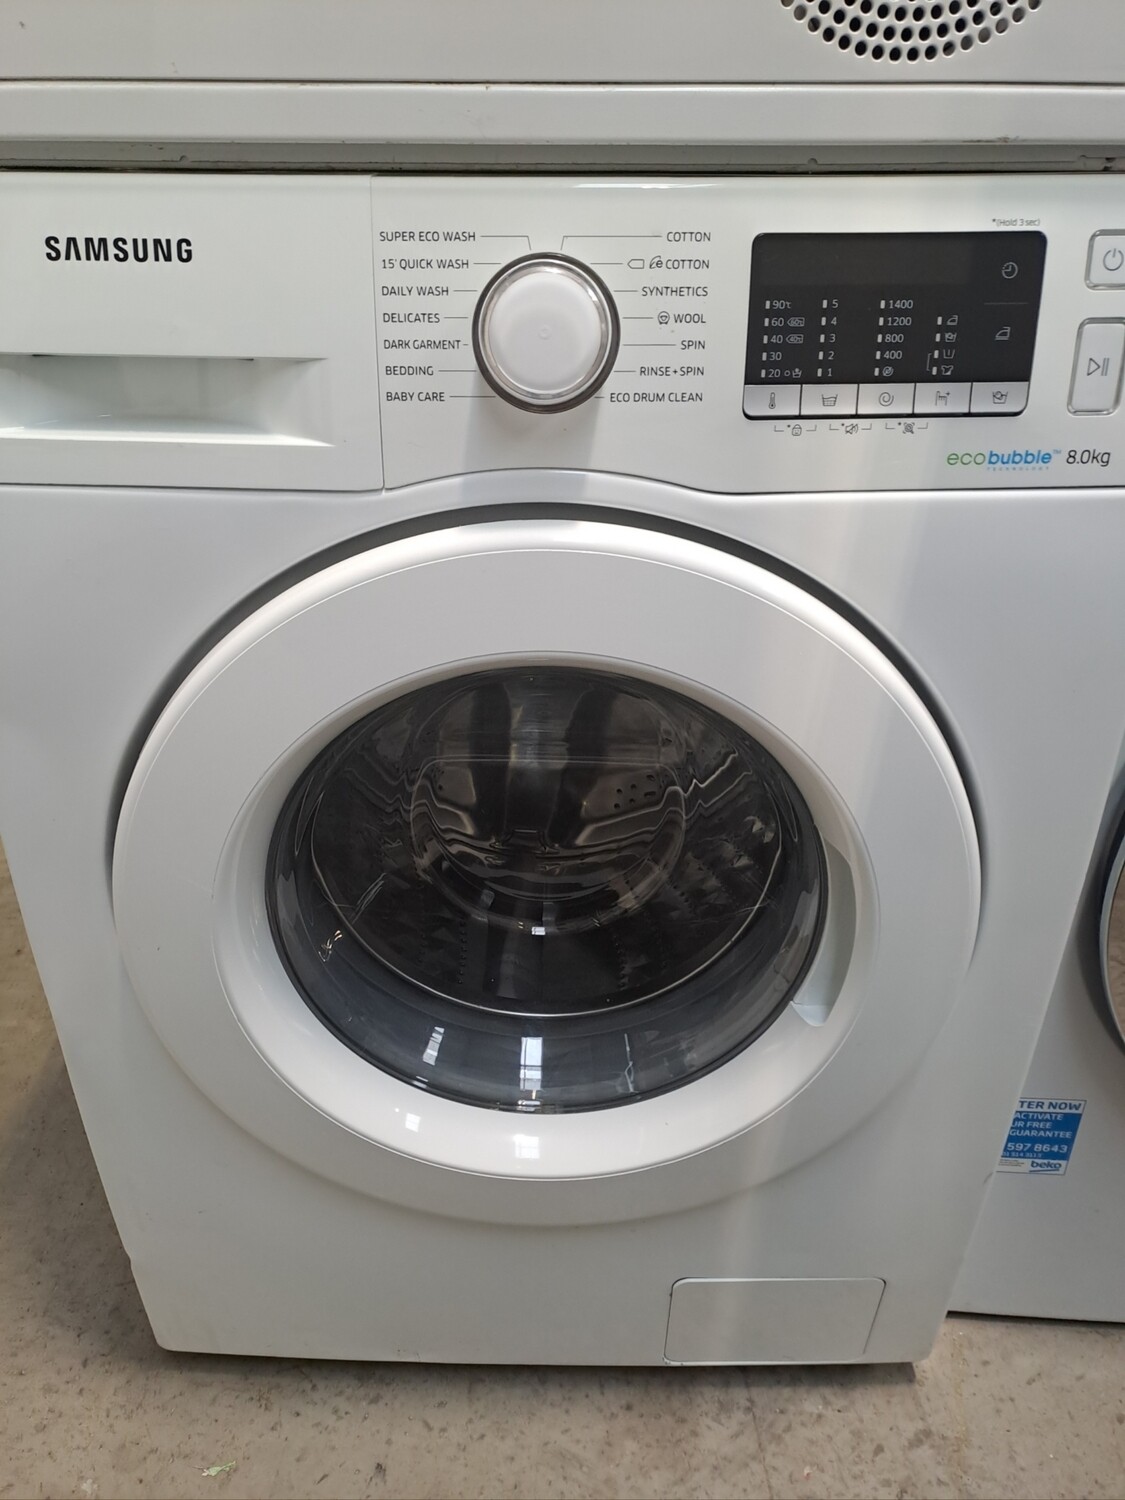 Samsung WW80J5555MW Ecobubble 8kg Load 1400 Spin Washing Machine - White - Refurbished - 6 Month Guarantee